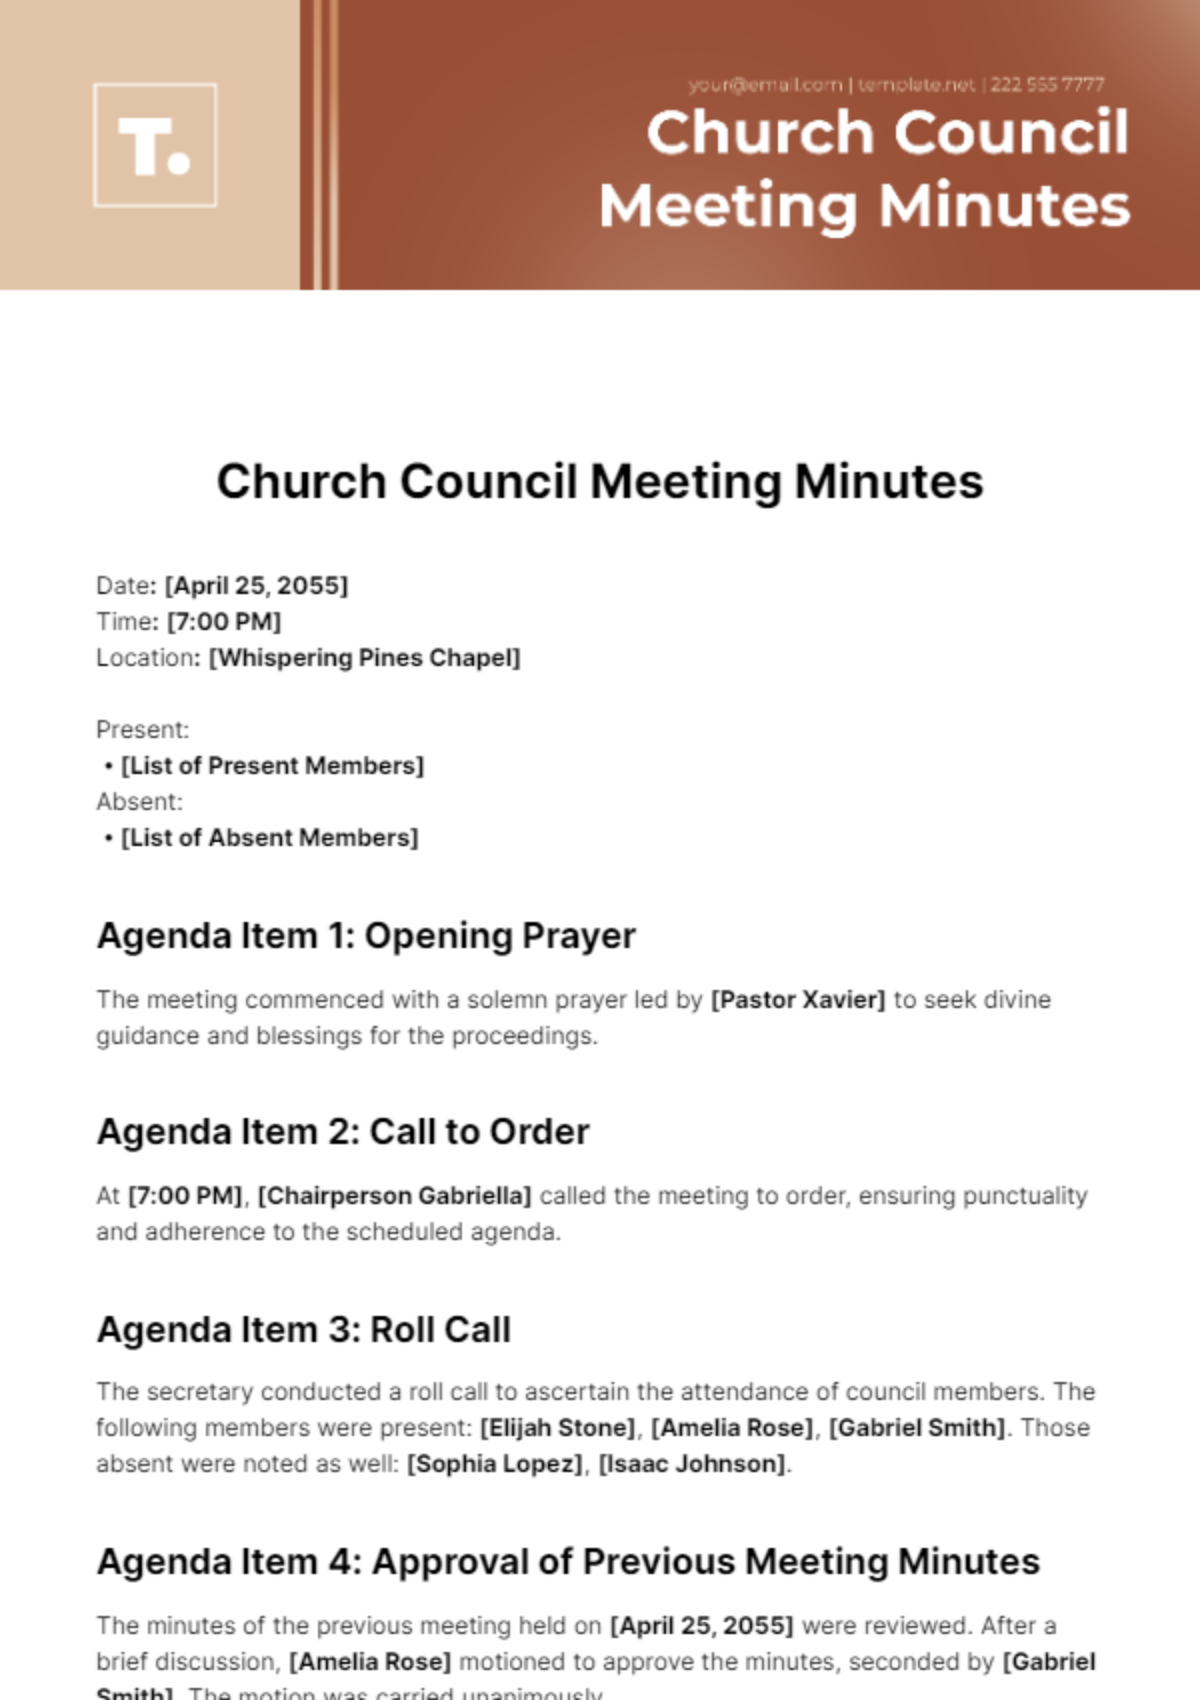 Church Council Meeting Minutes Template